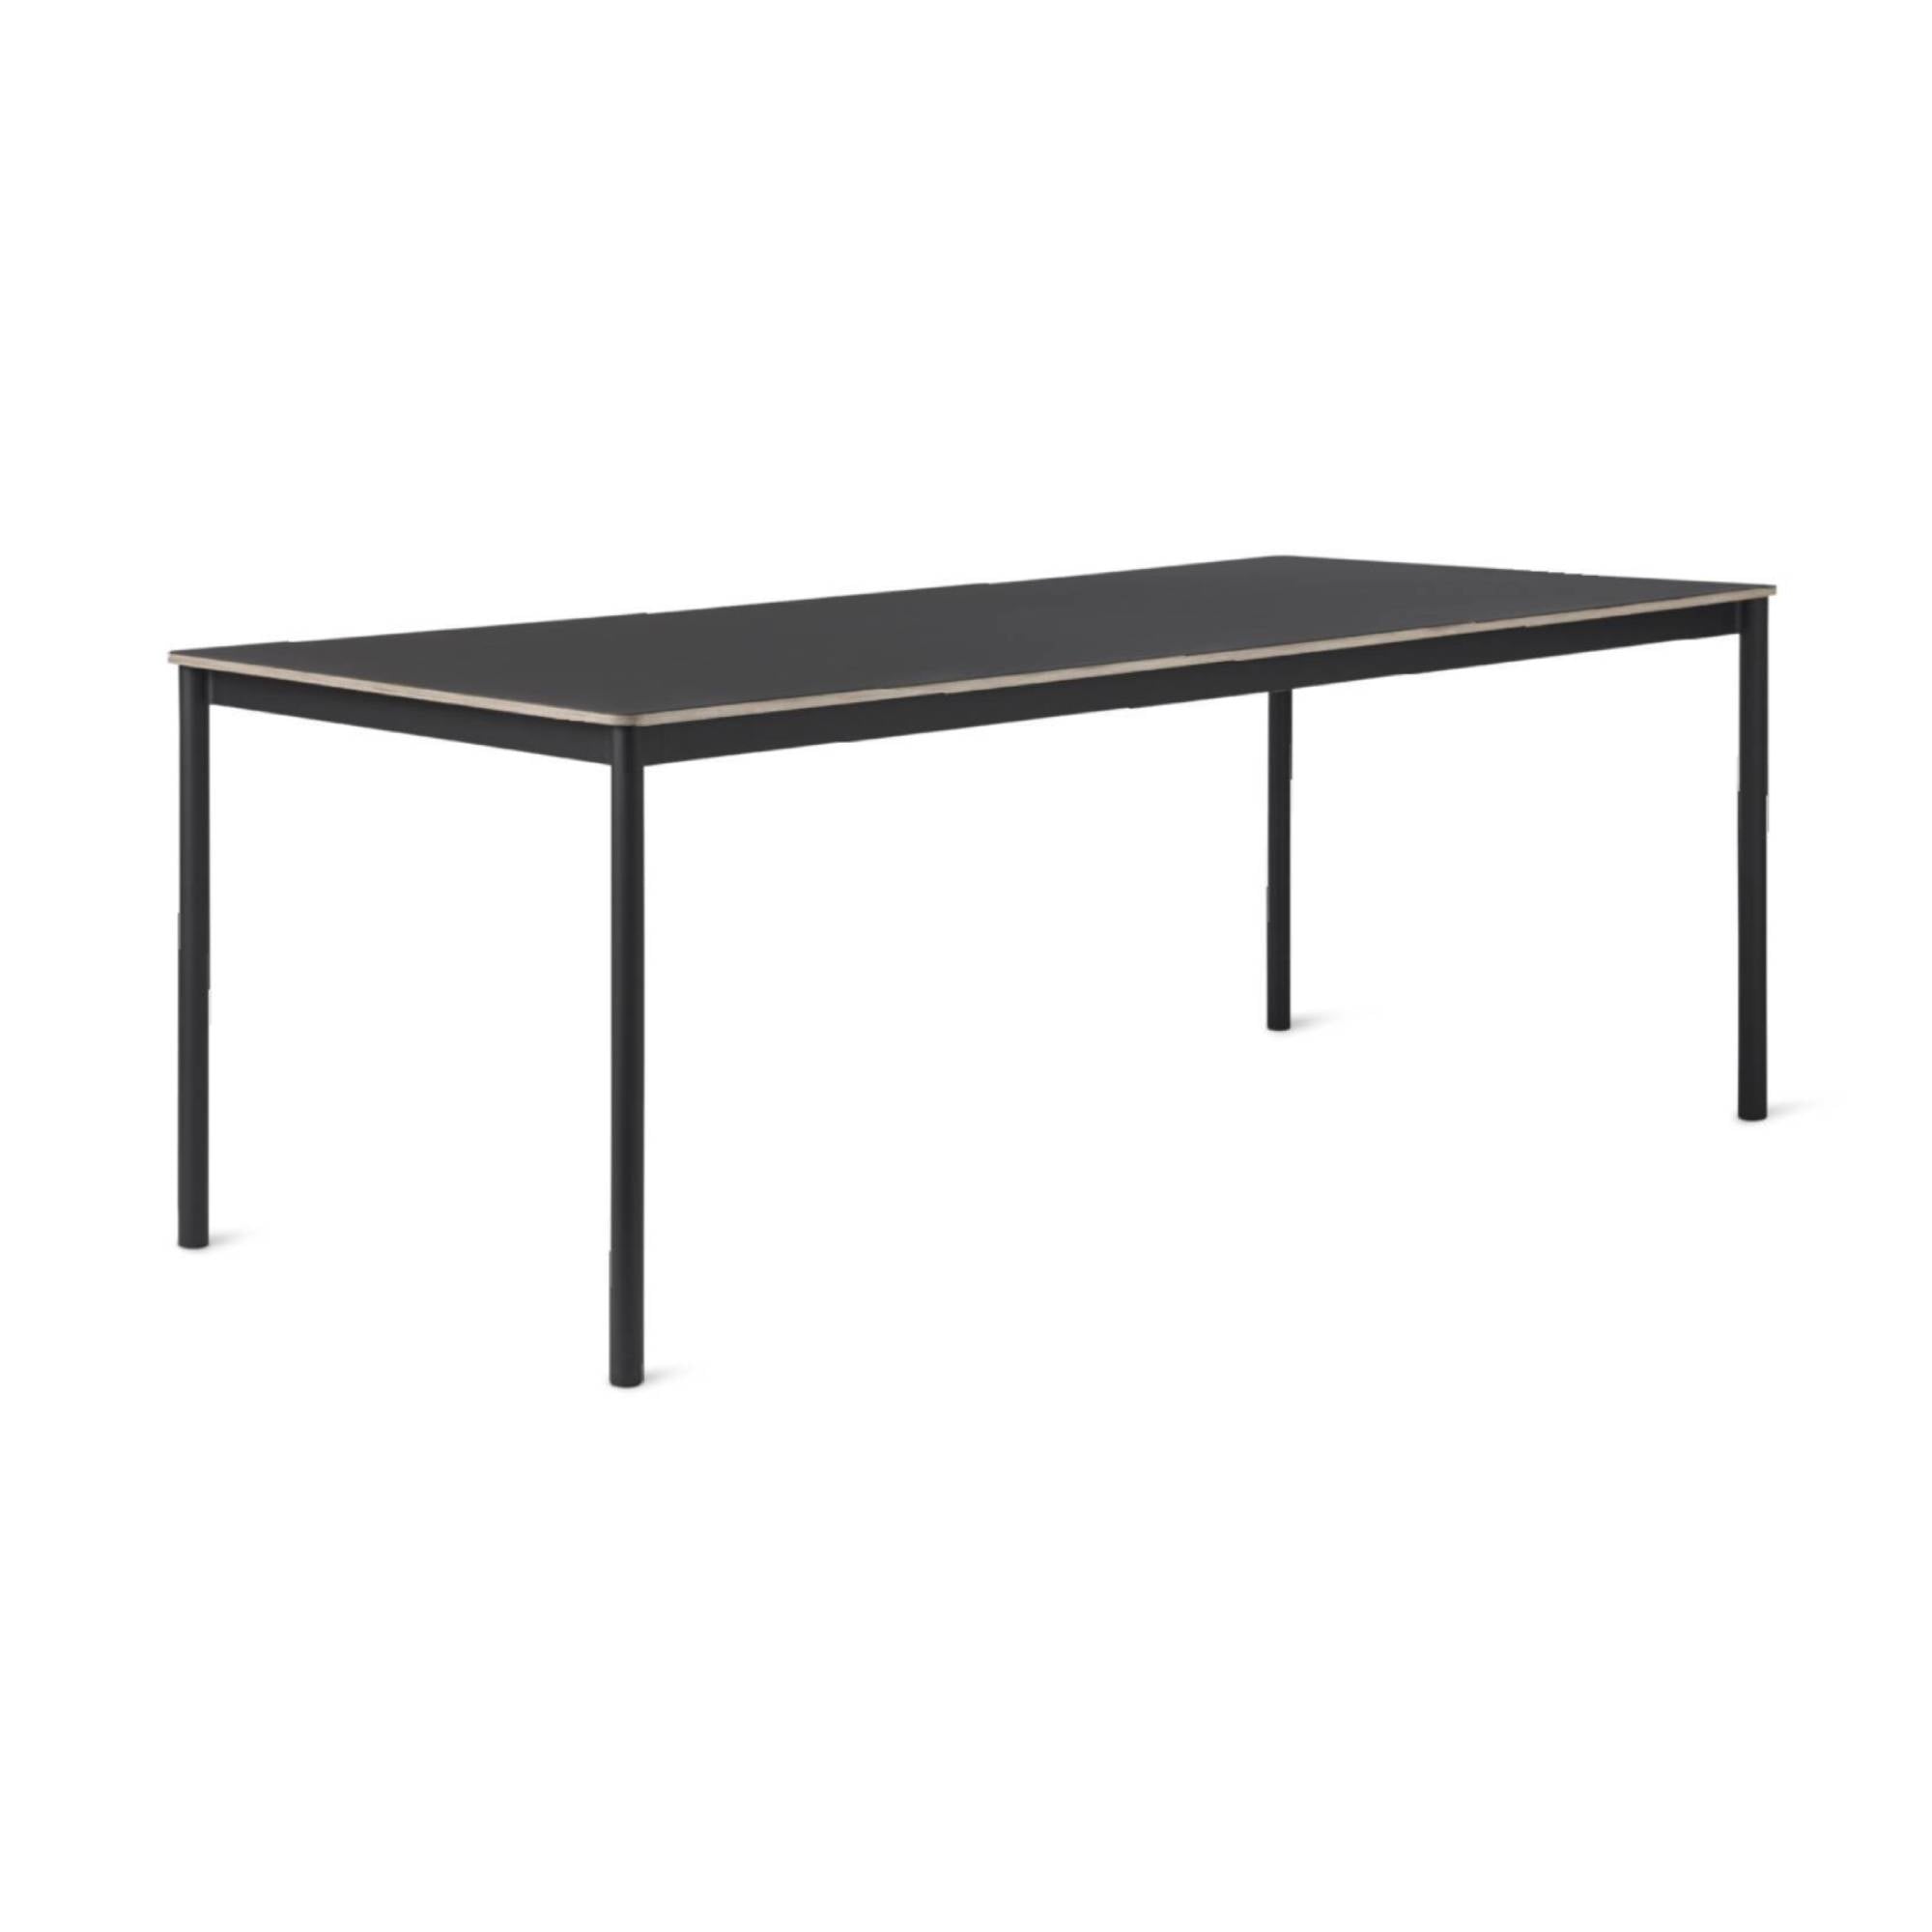 Base Table: Large + Black Linoleum + Plywood Edge + Black